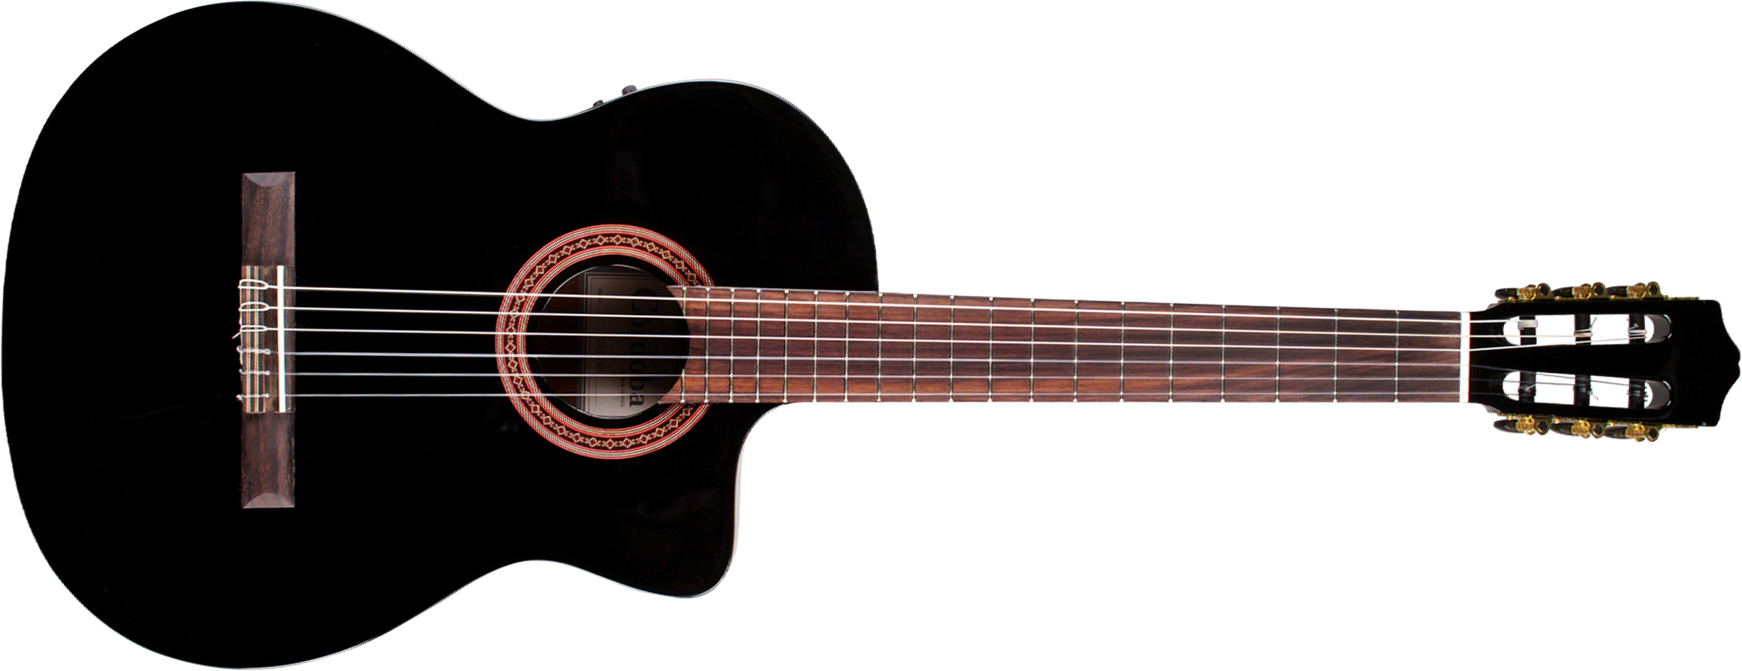 Cordoba C5-ce Iberia Cw Cedre Acajou Rw +housse - Black - Classical guitar 4/4 size - Main picture